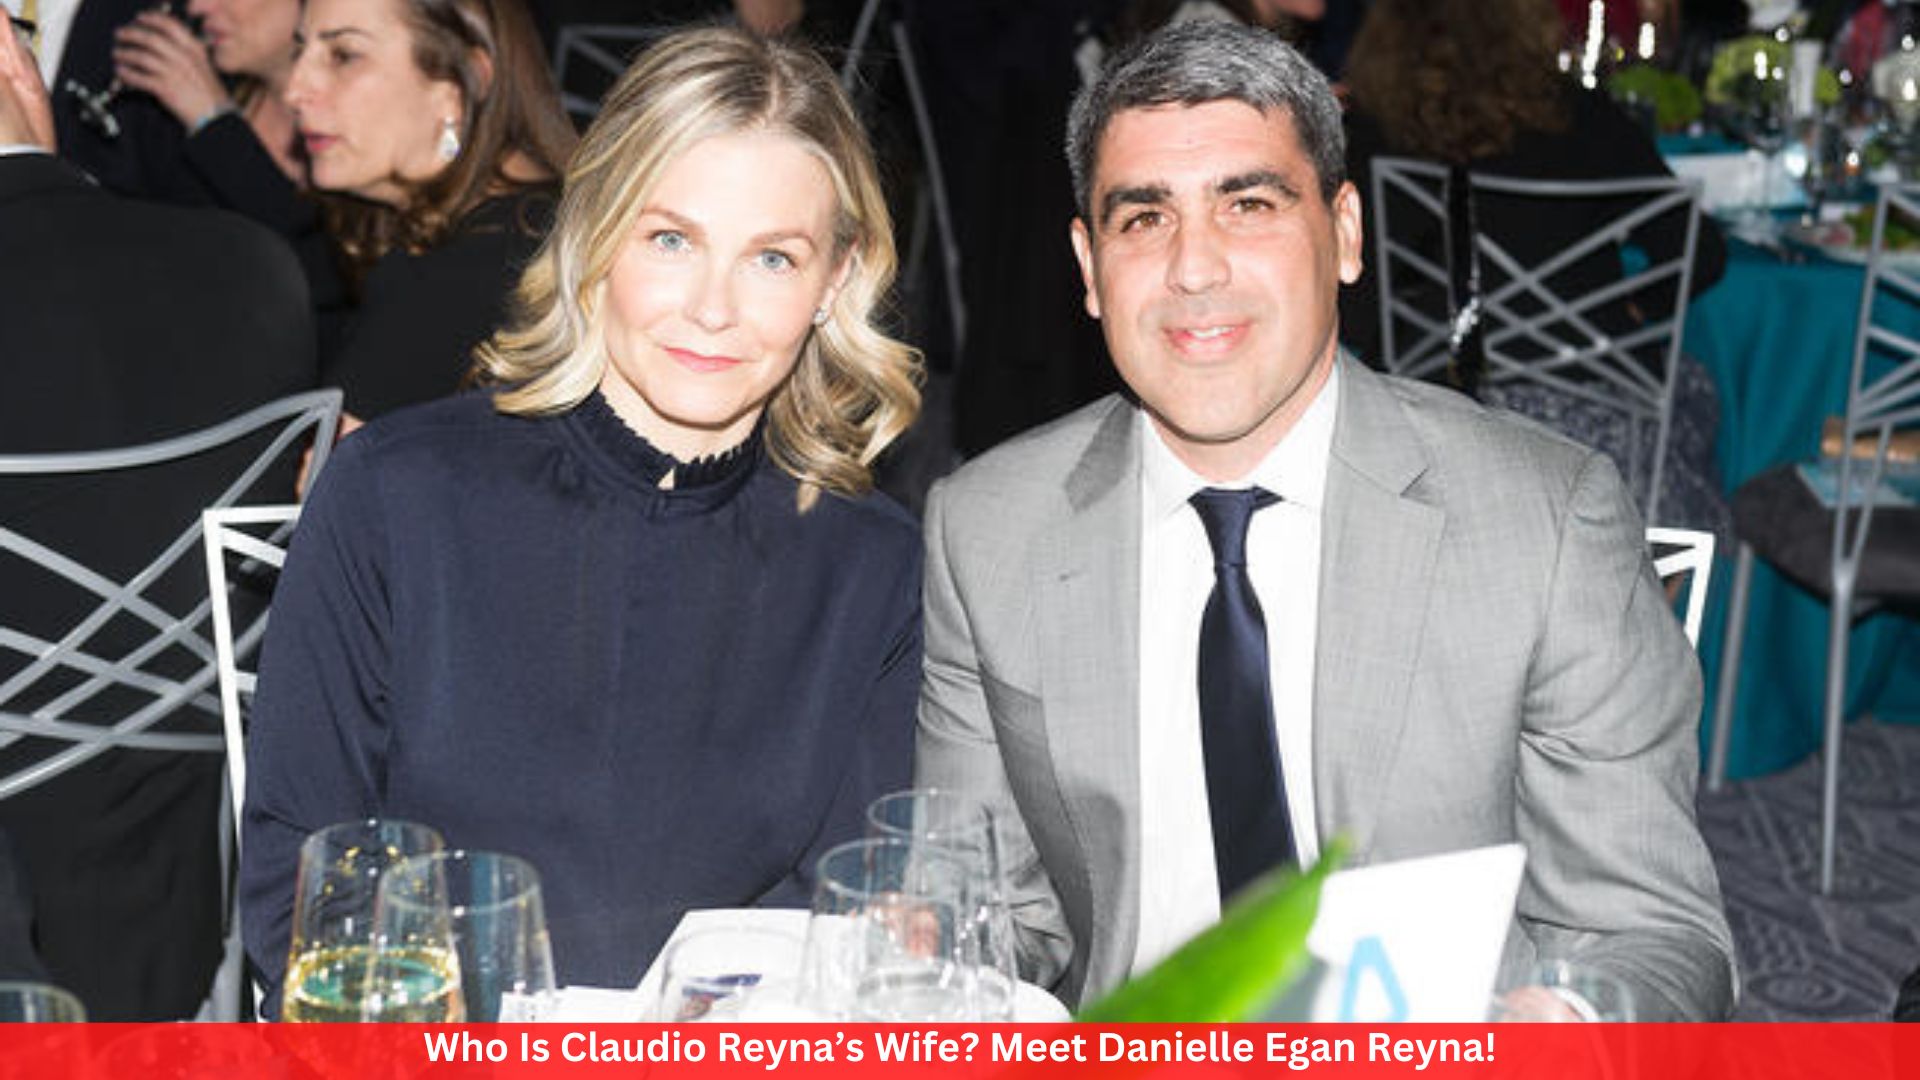 Who Is Claudio Reyna’s Wife? Meet Danielle Egan Reyna!